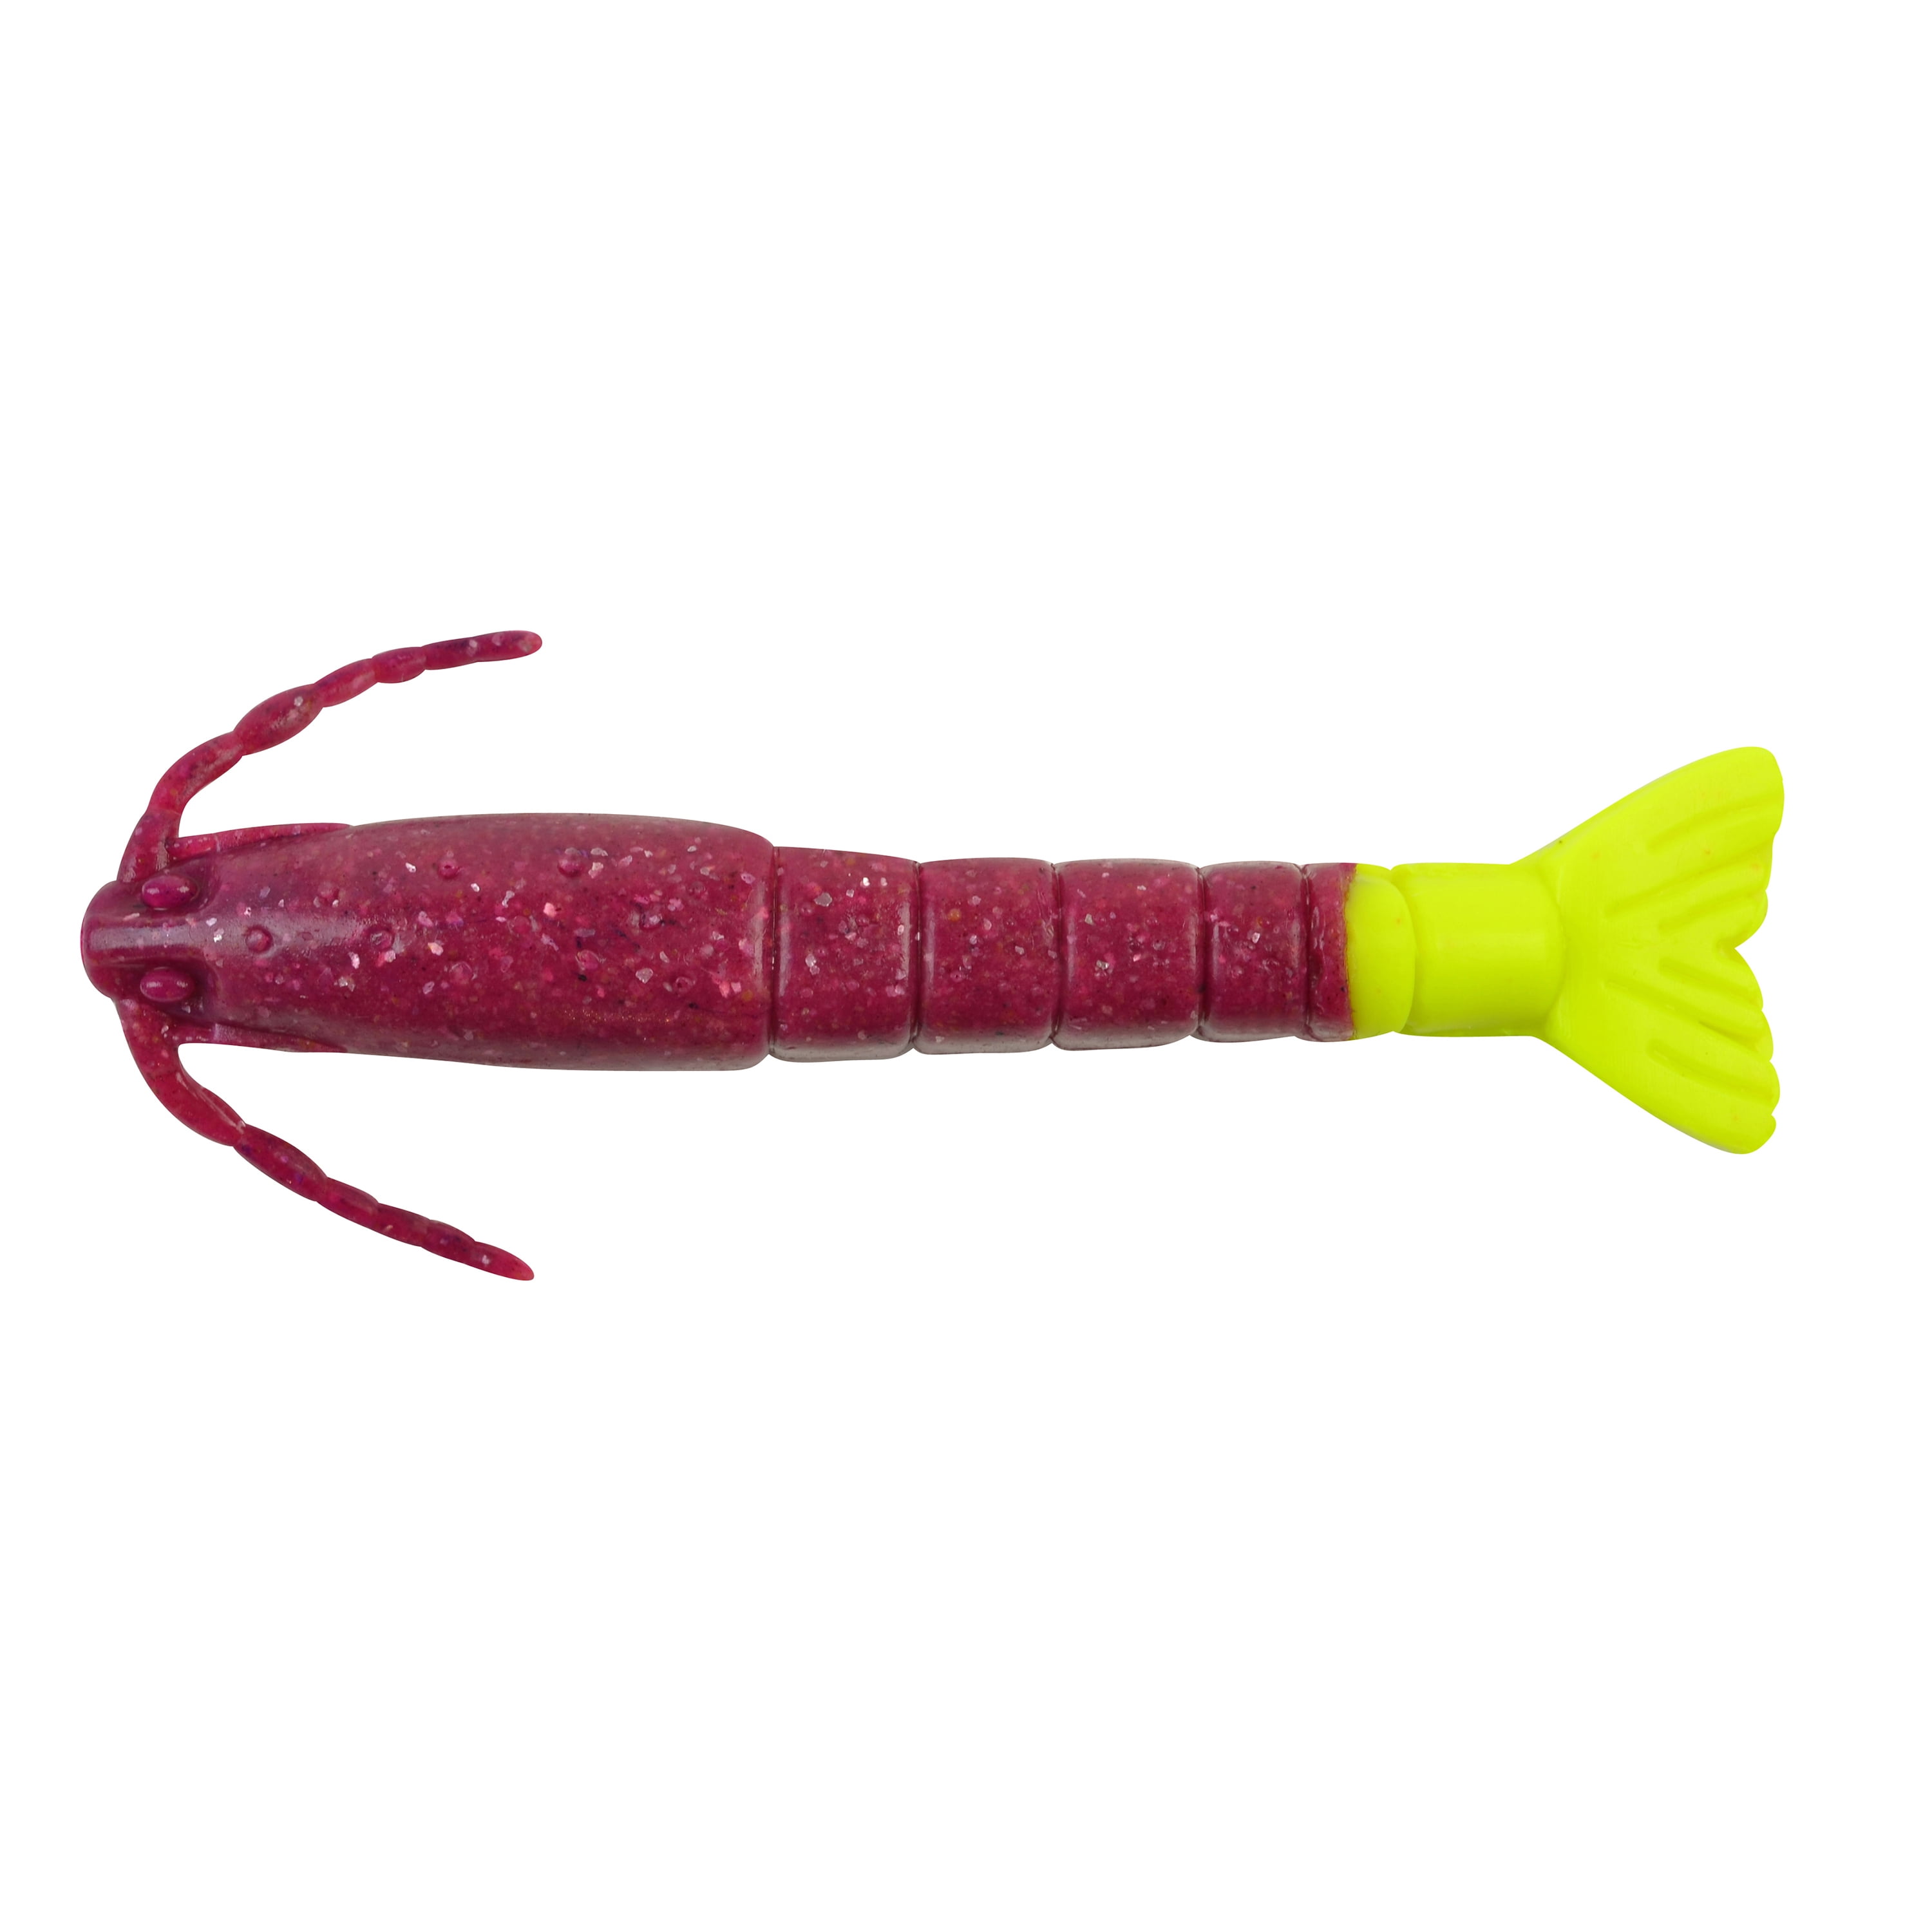  Berkley Gulp! Shrimp Saltwater Fishing Soft Bait, New Penny  Fleck, 3in : Artificial Fishing Bait : Sports & Outdoors